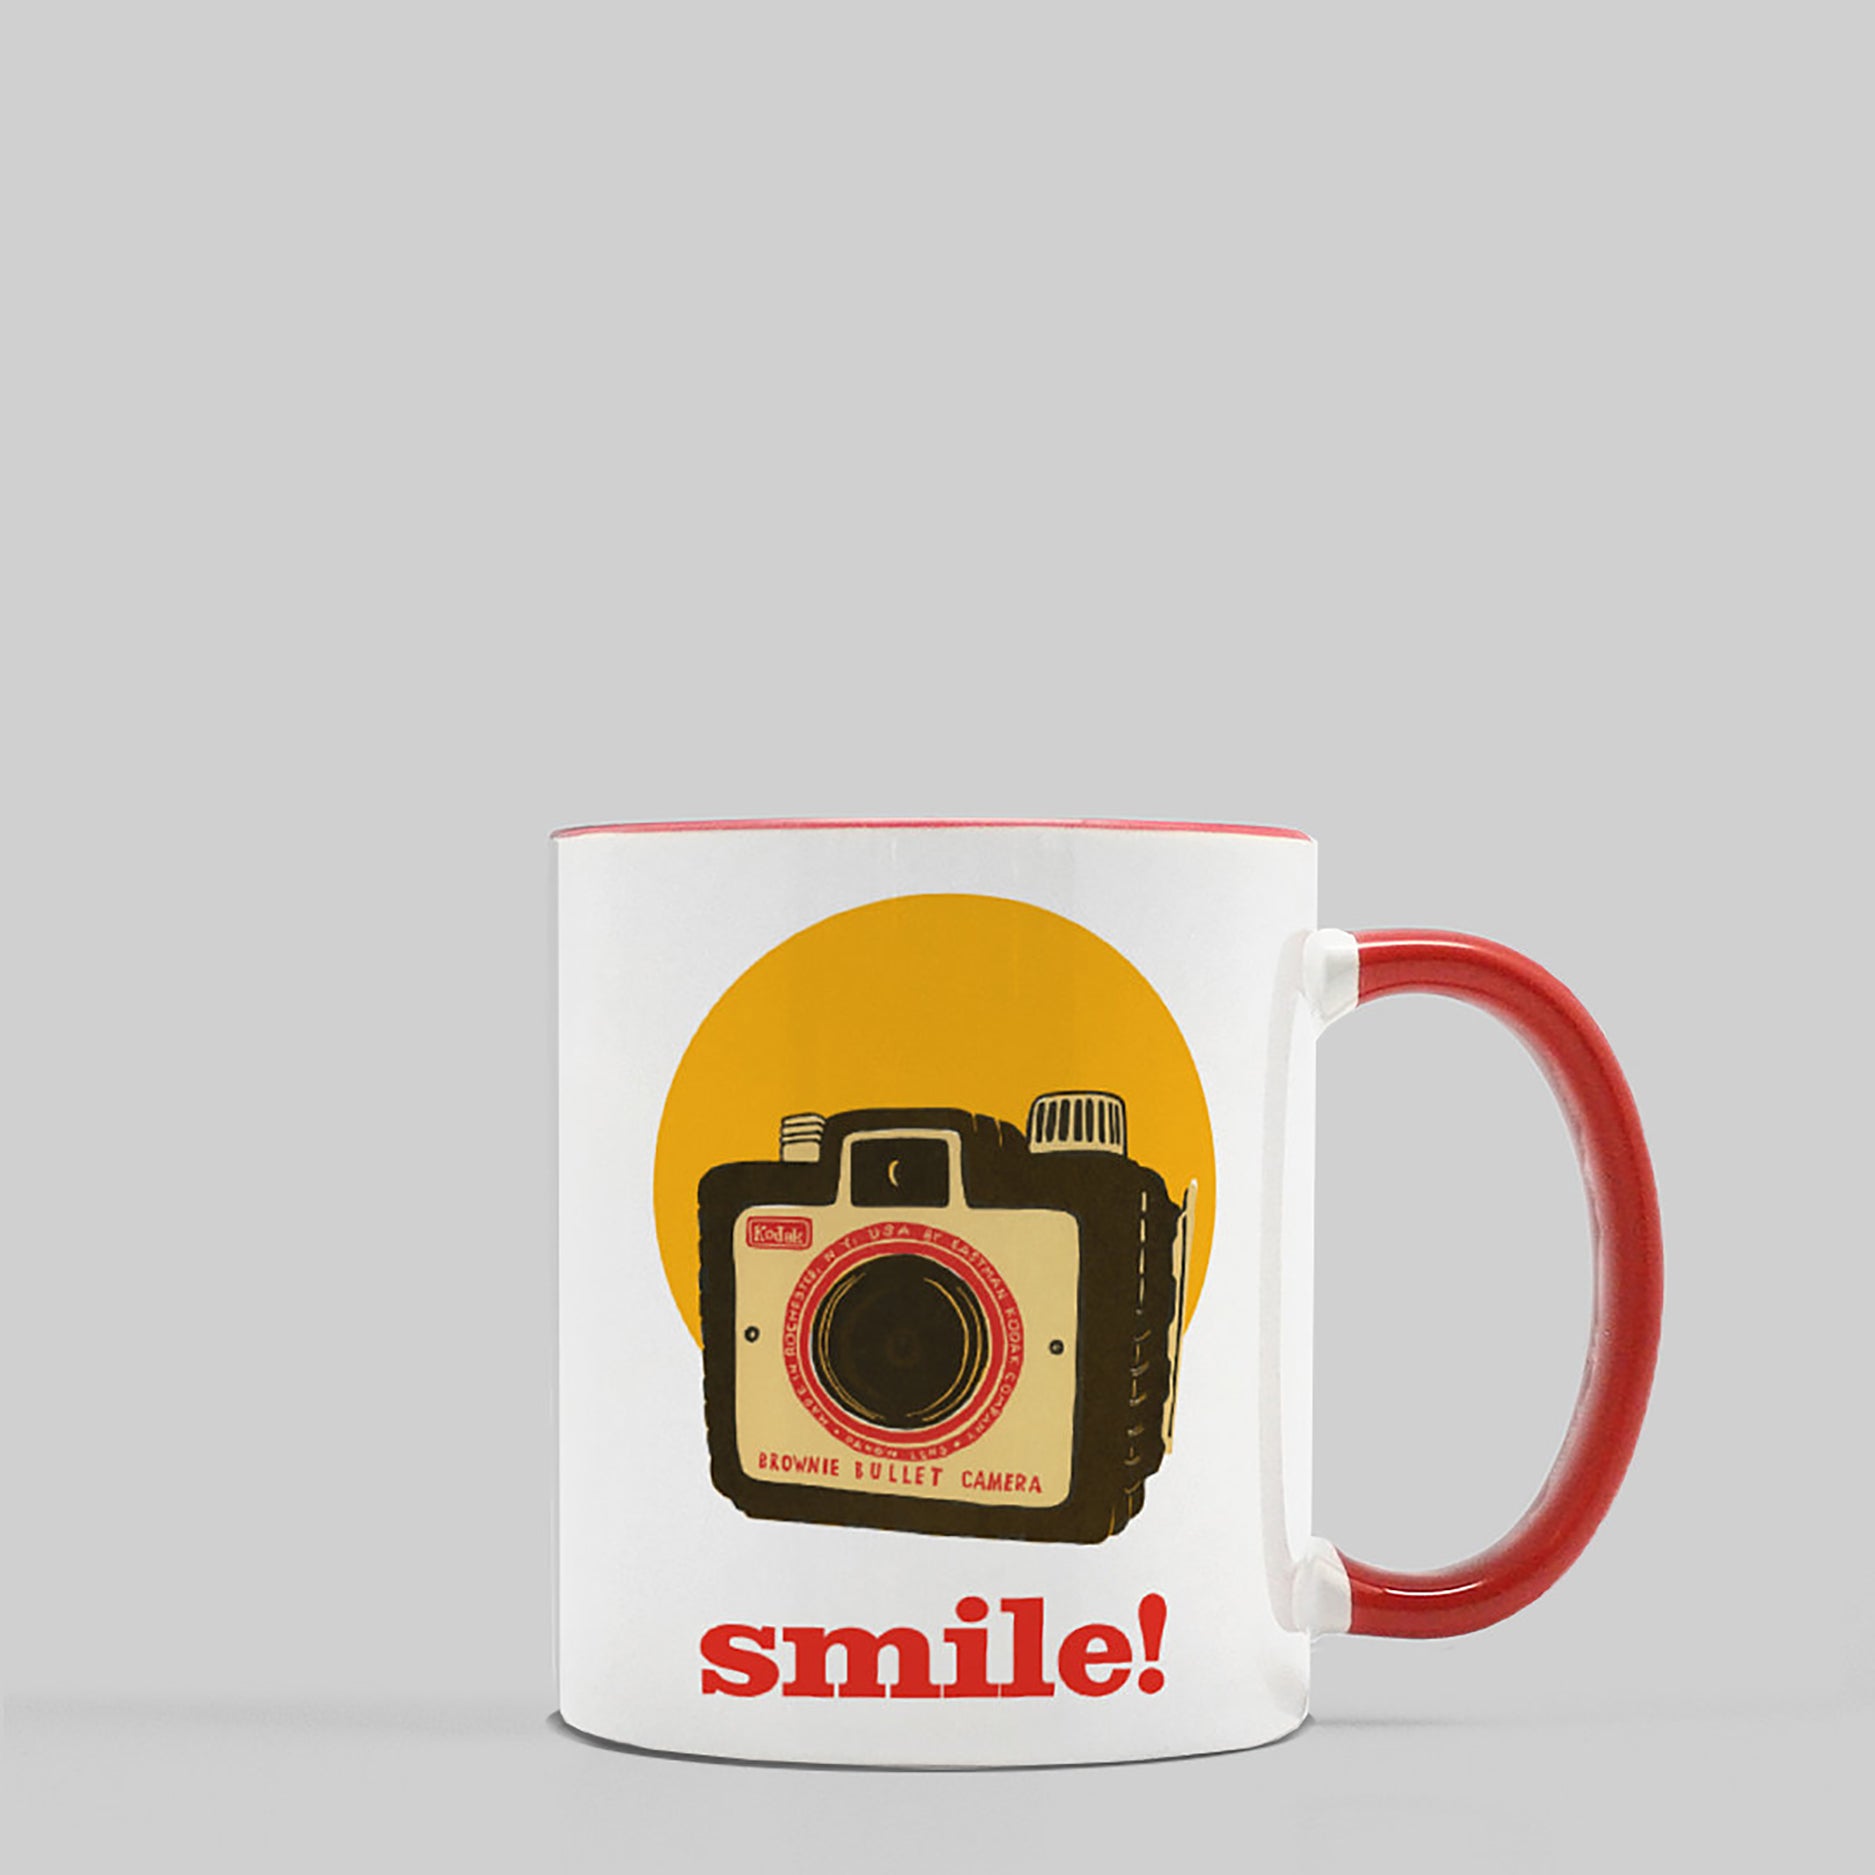 Smile! Ceramic Coffee Mug, 11oz